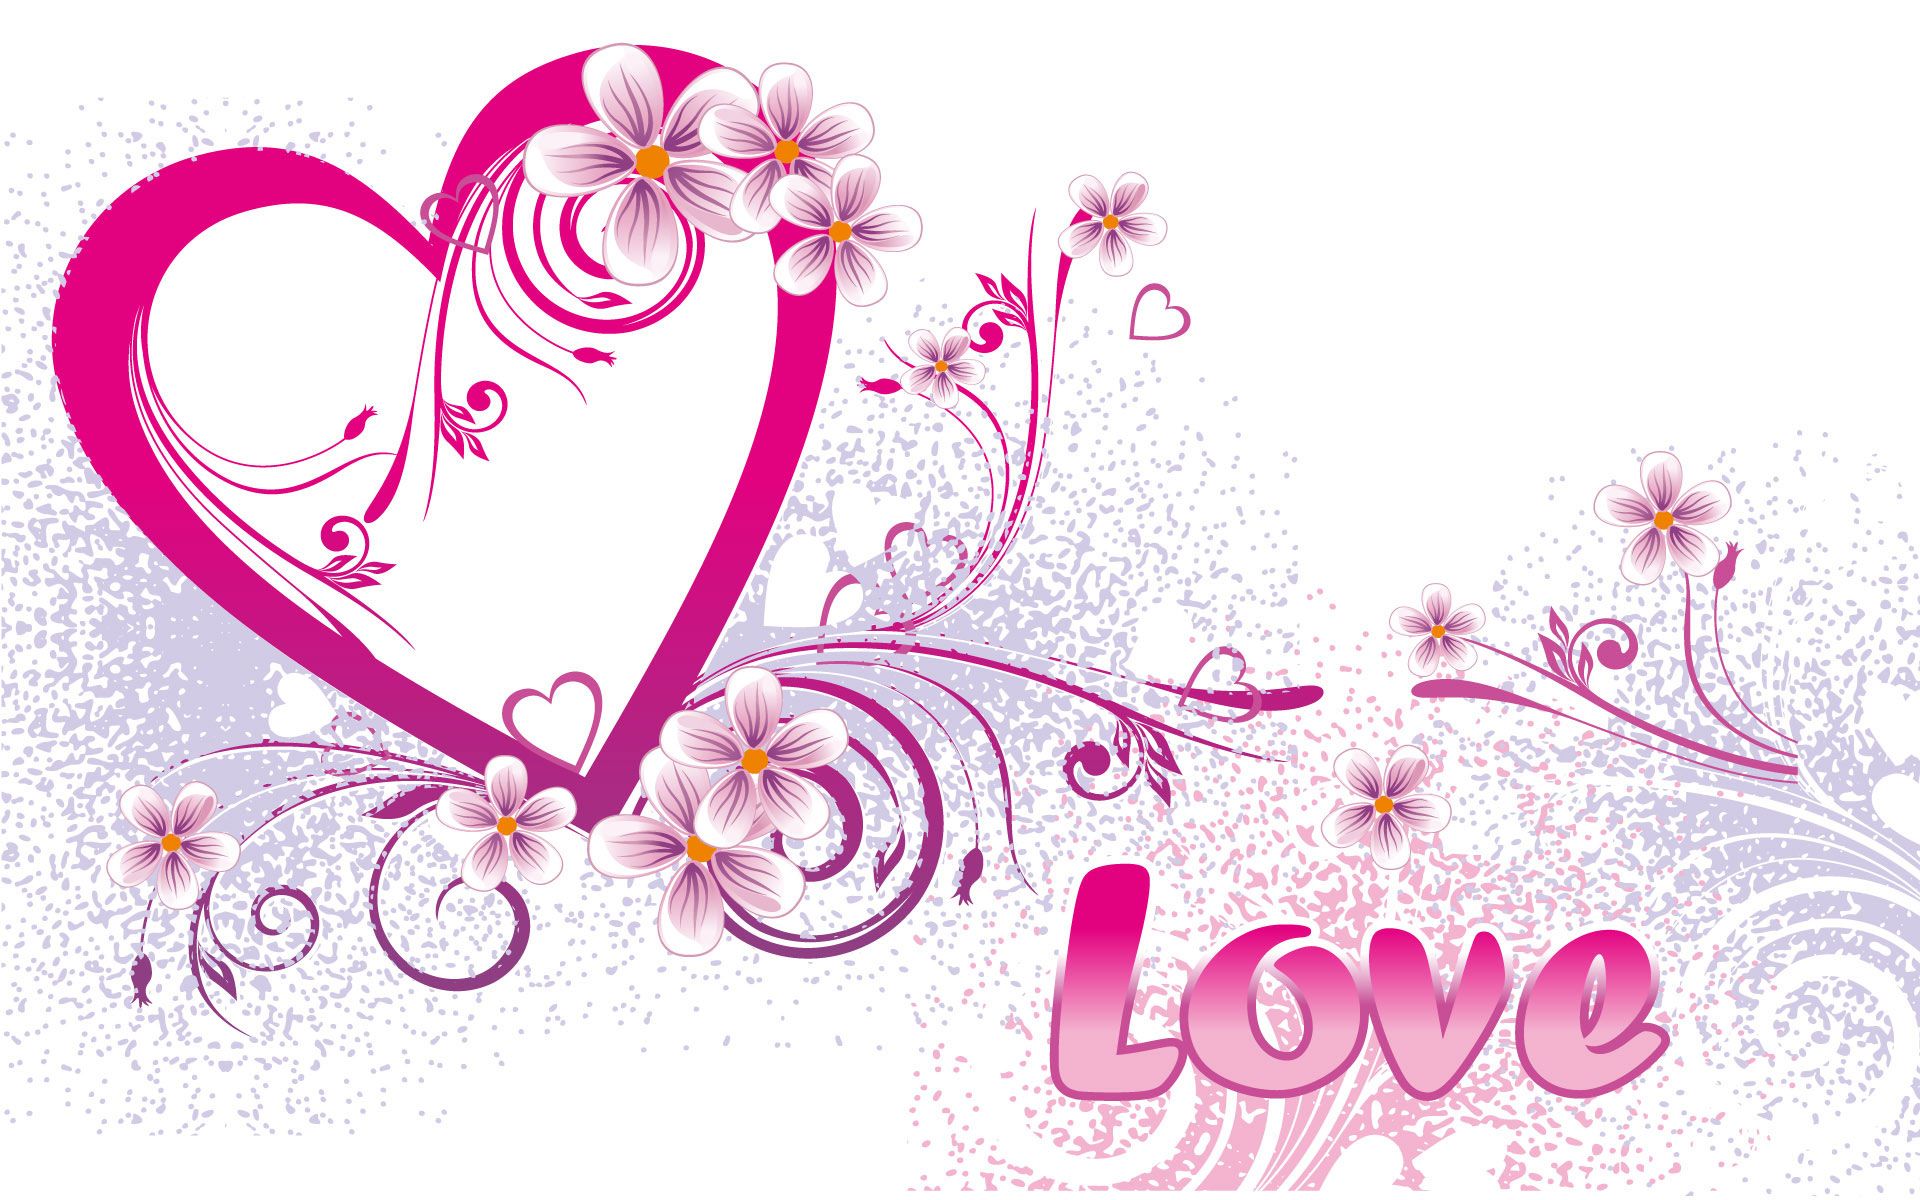 Love-Wallpaper-for-valentines-day1.jpg